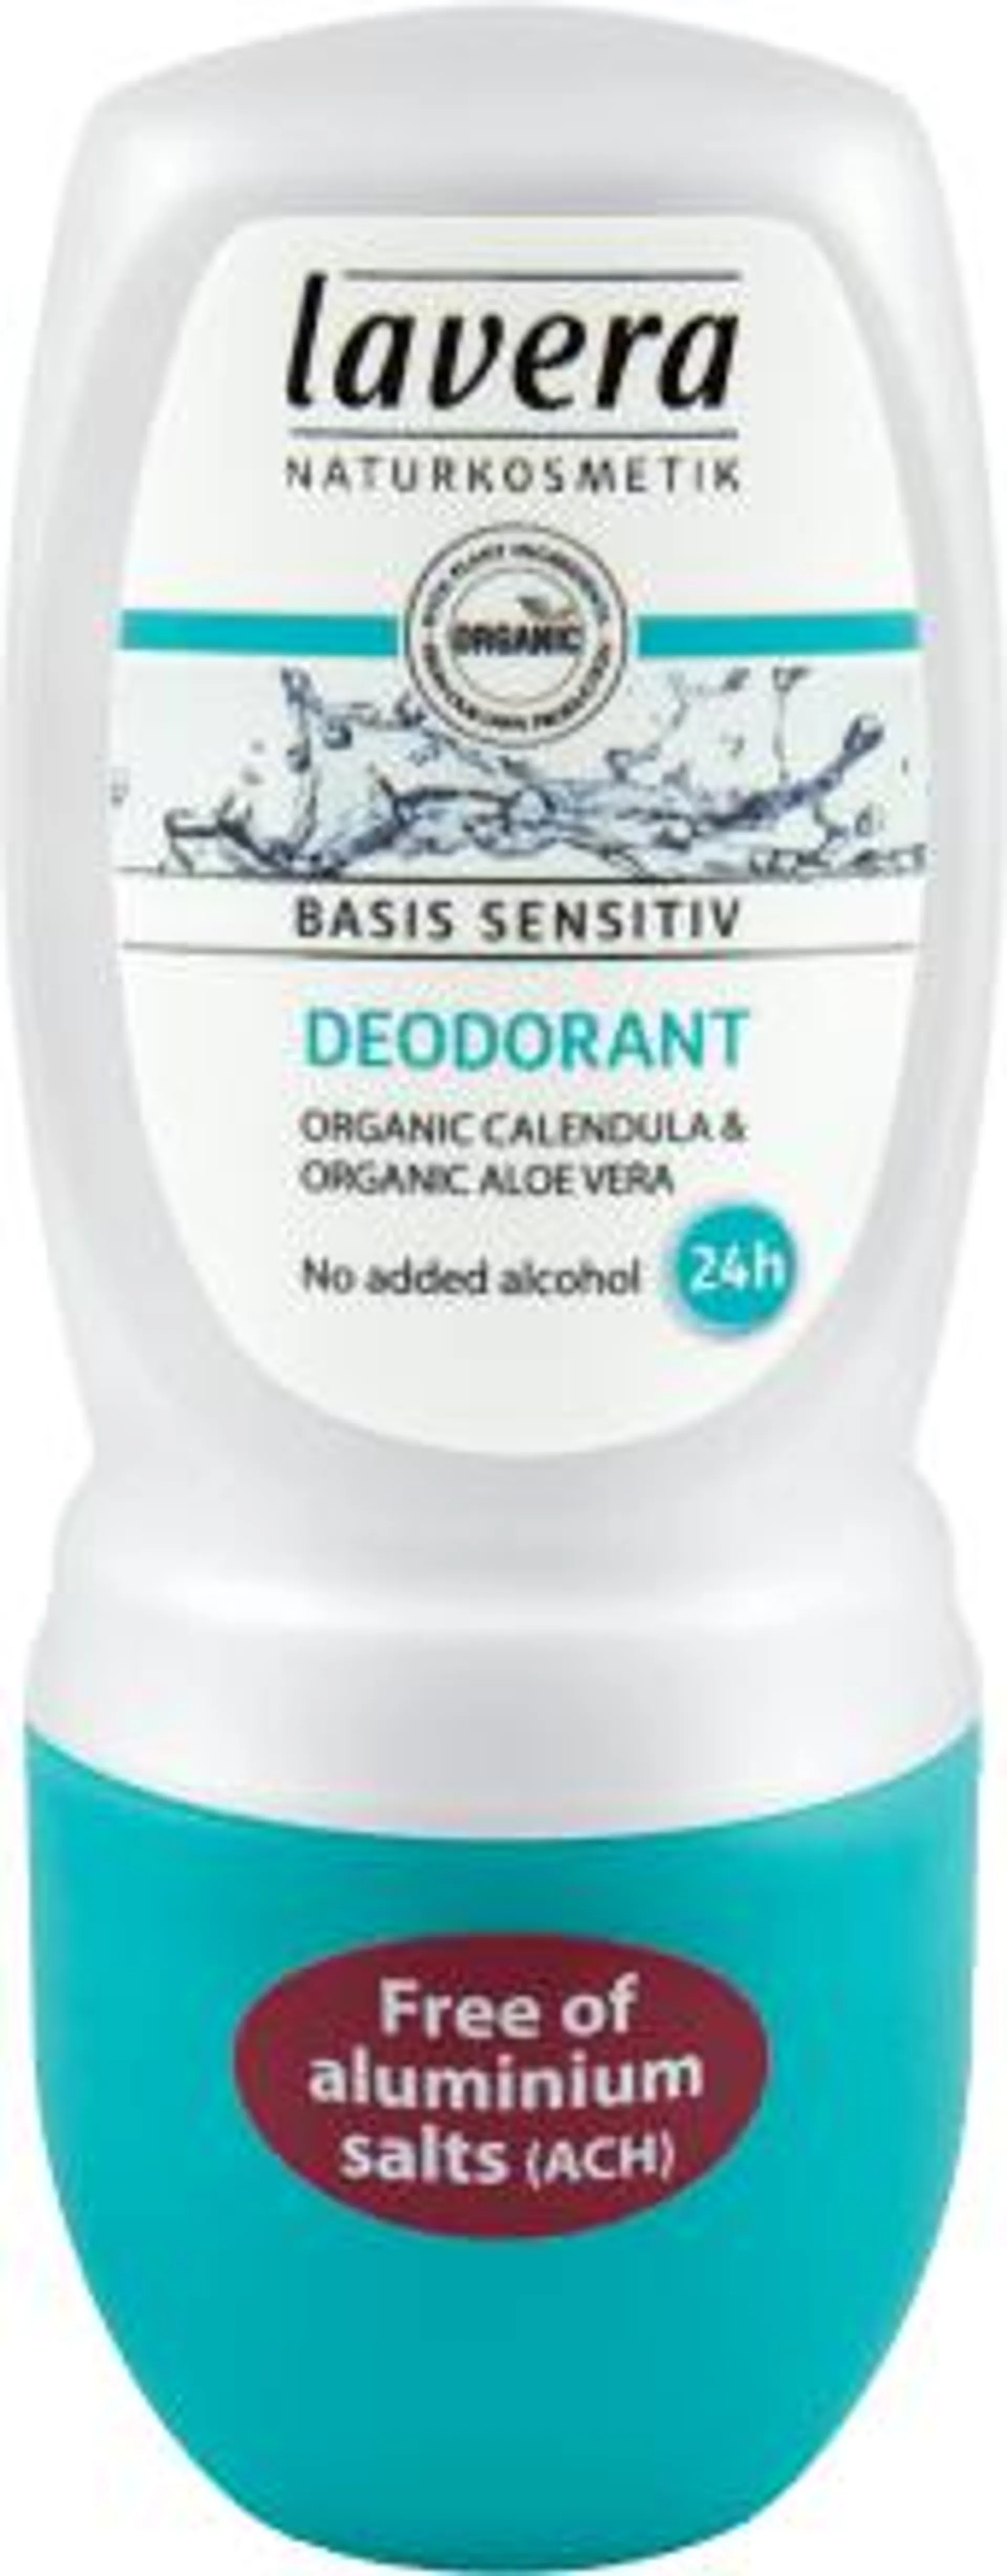 Deodorante roll-on Natural and Sensitive Basis Sensitiv 50 ml